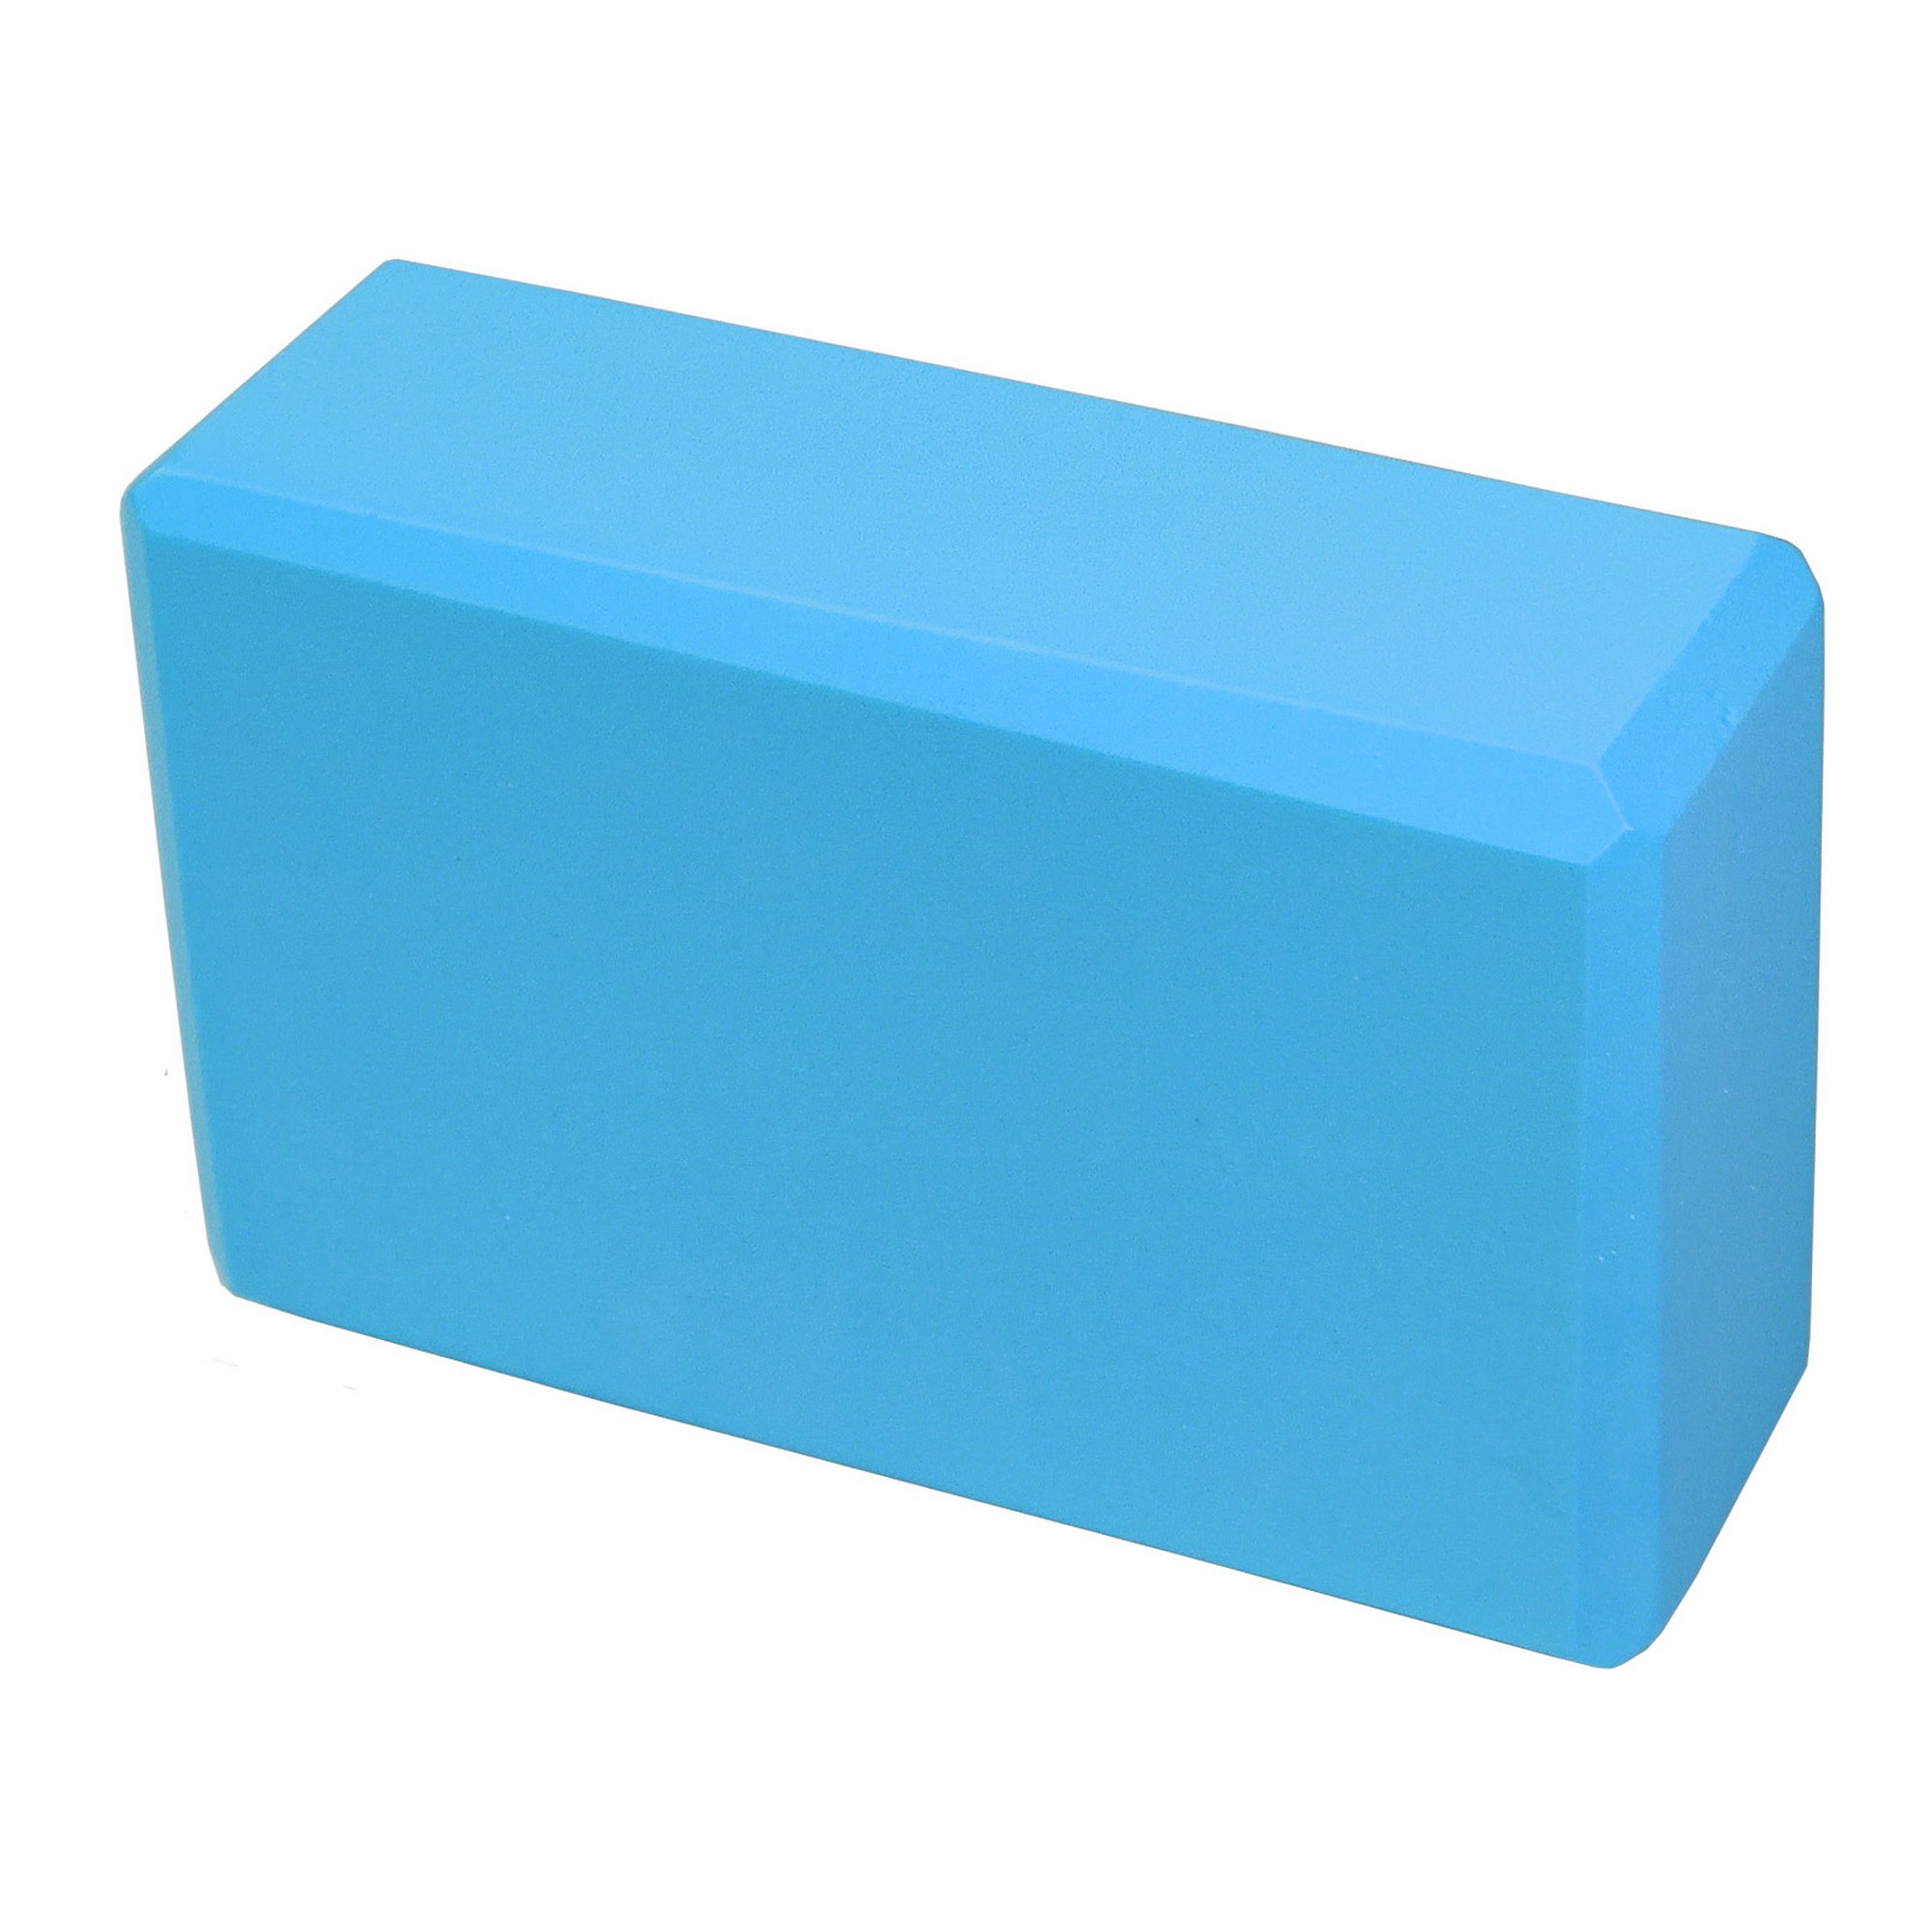 Йога блок Sportex полумягкий, из вспененного ЭВА 22,3х15х7,6 см E39131-11 синий - фото 1